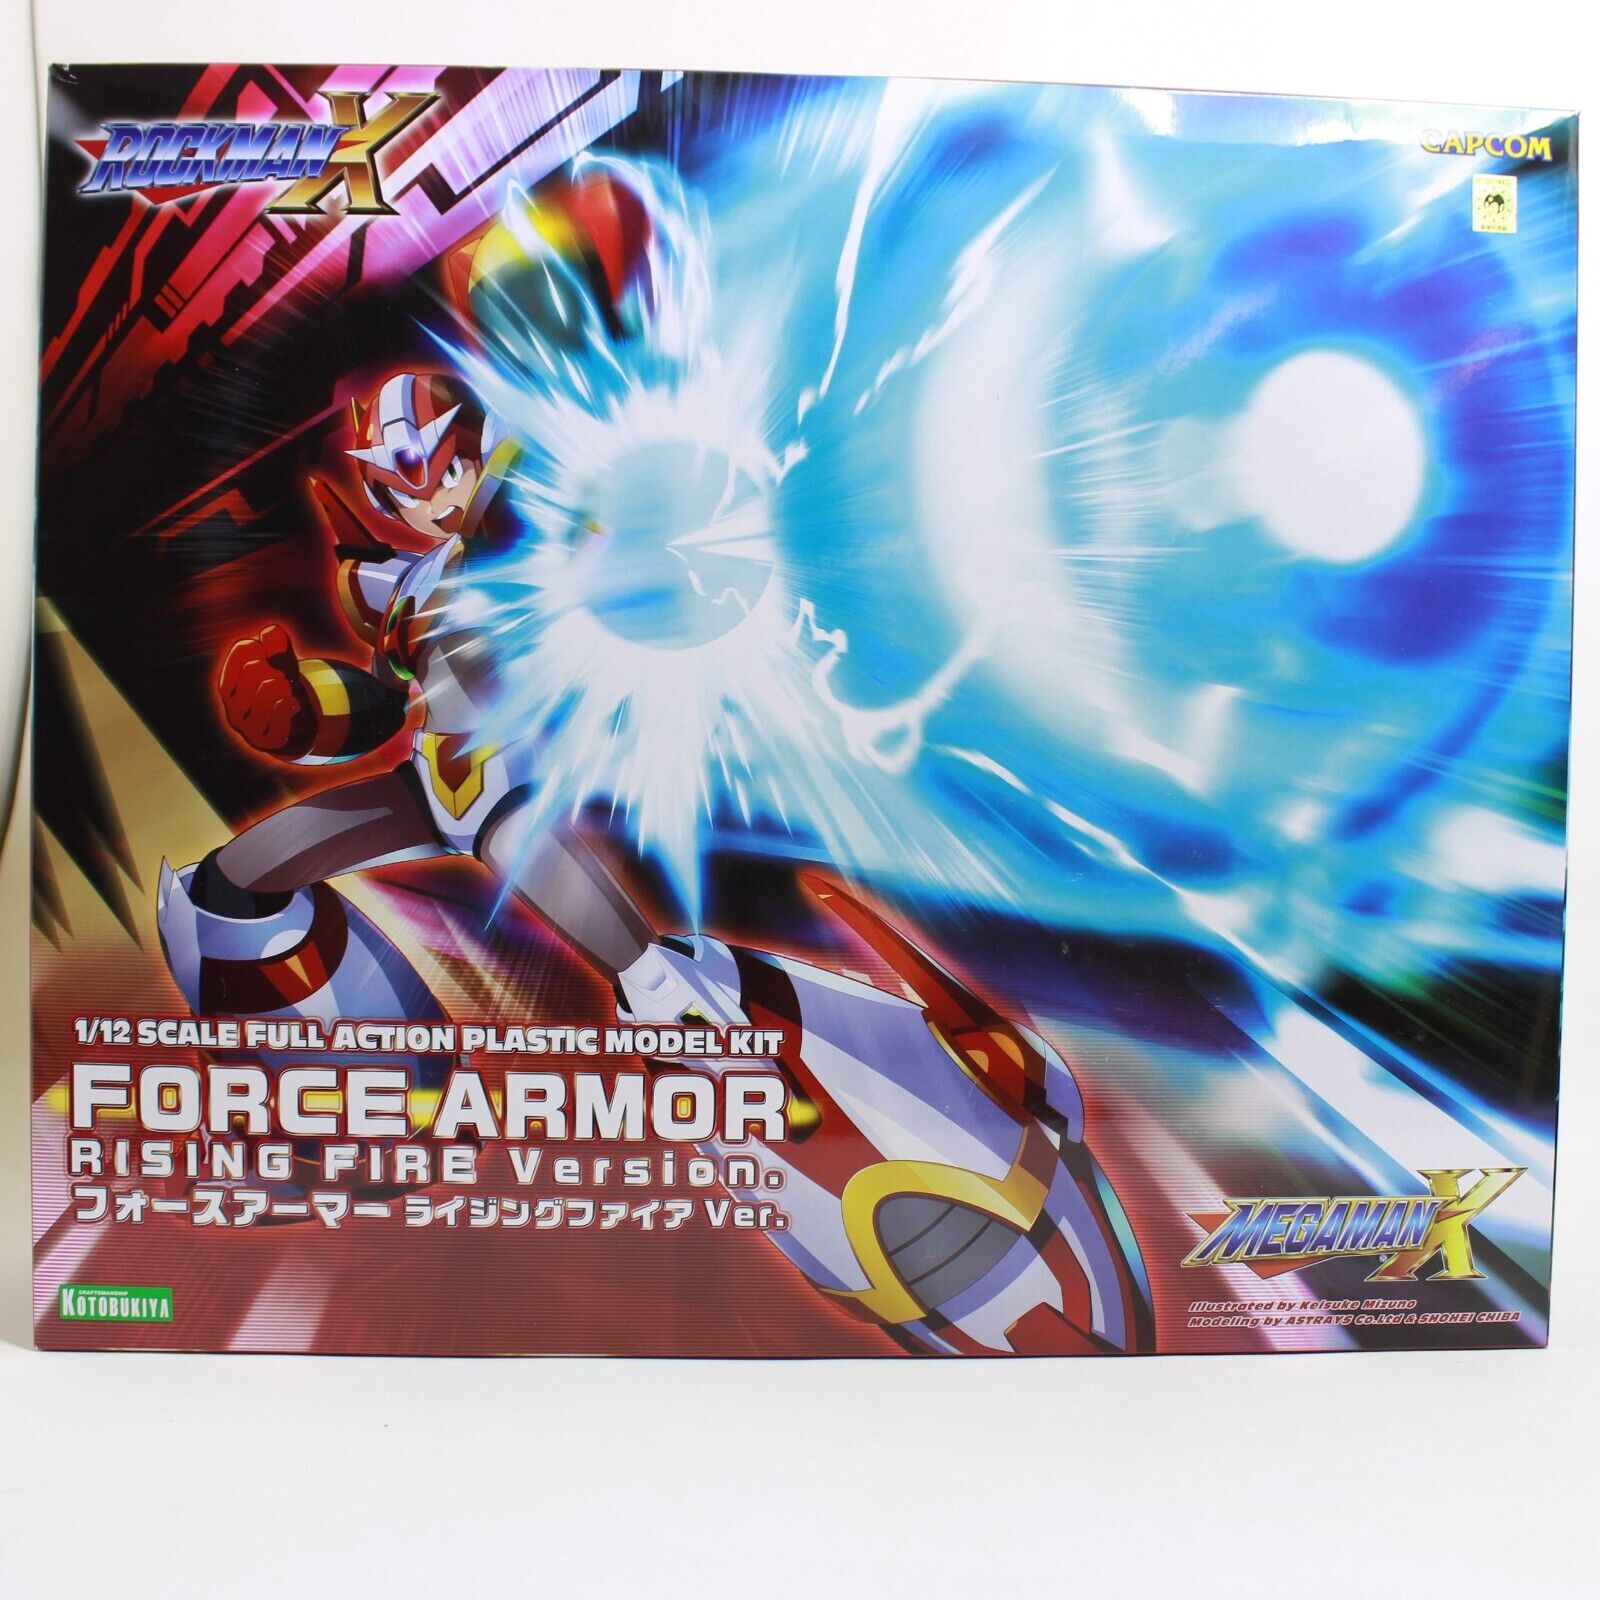 Kotobukiya Mega Man X Force Armor Rising Fire Version - Full Action Model Kit